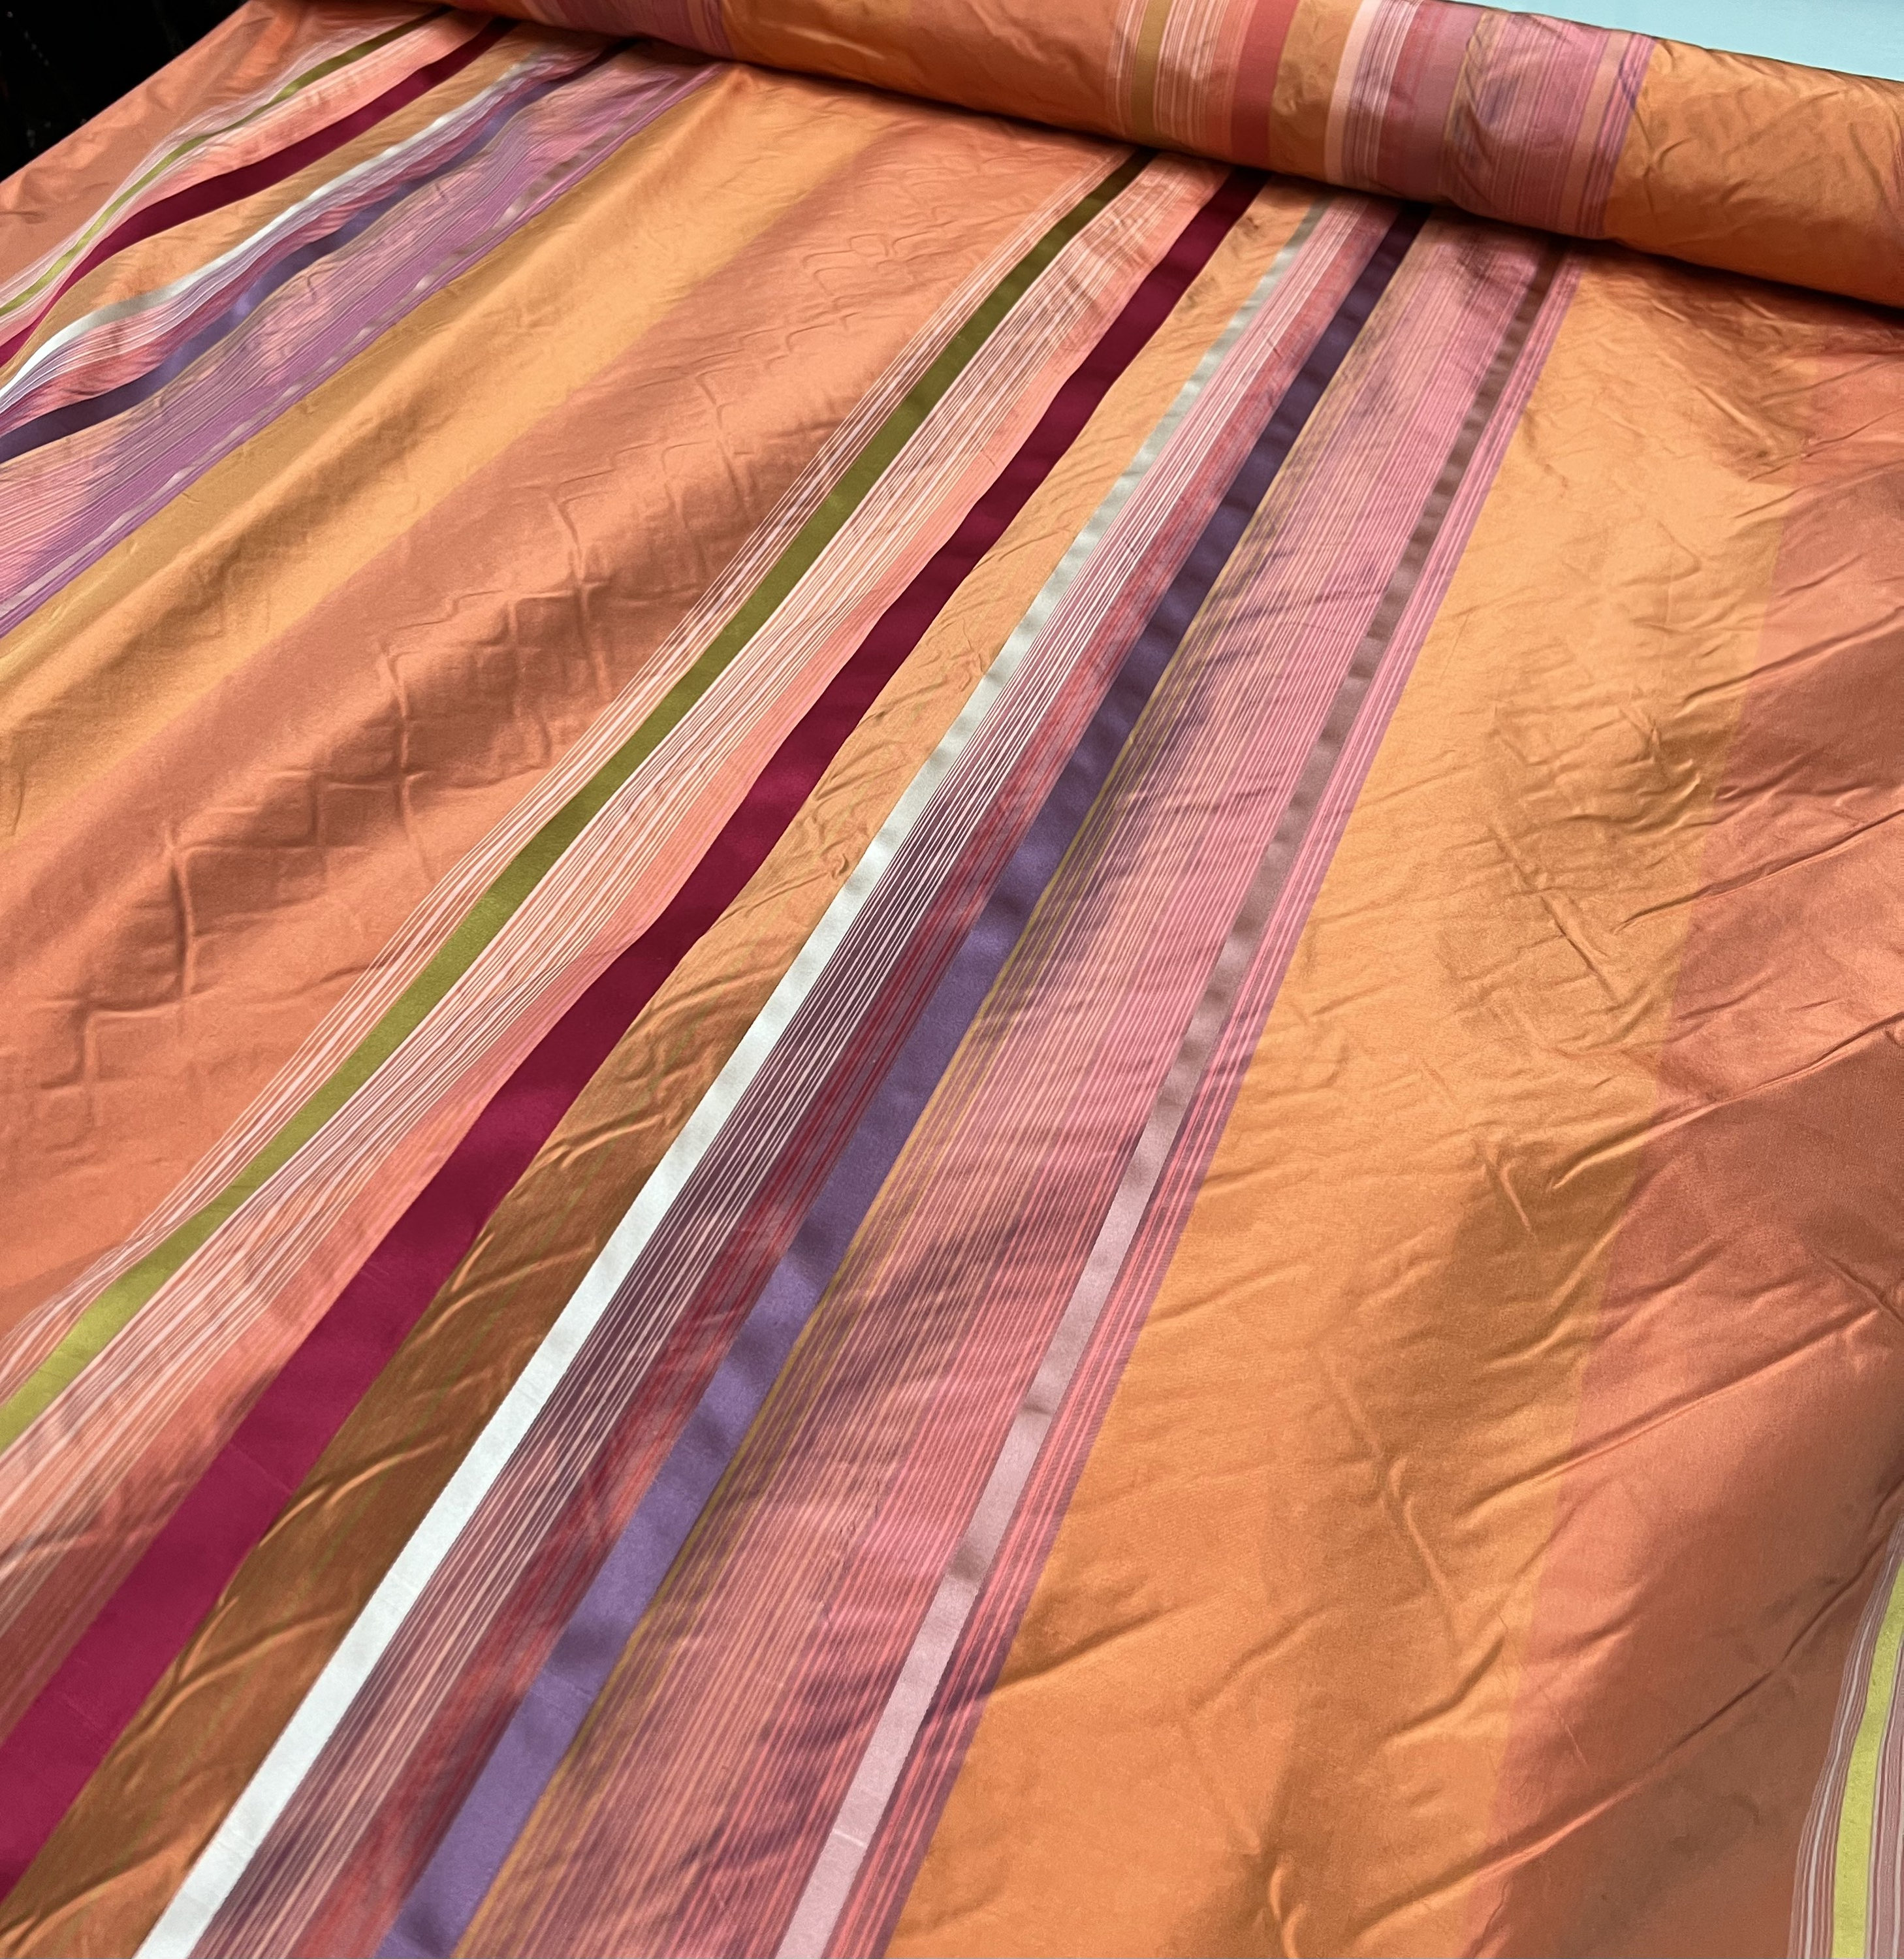 Blush Silk Taffeta Fabric 100% Pure Silk 54 Wide Sold By The Yard